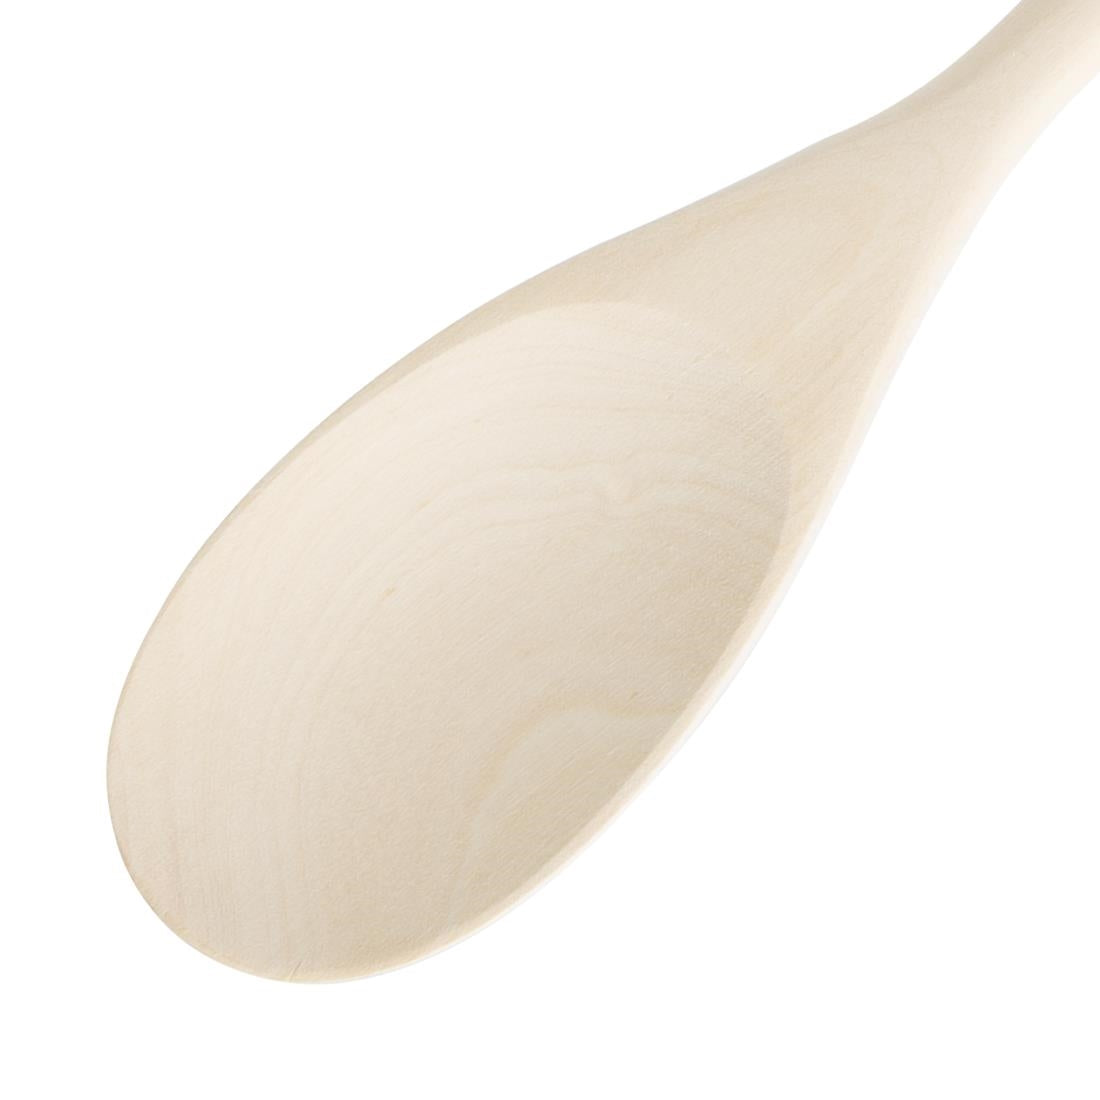 D773 Vogue Wooden Spoon 14"